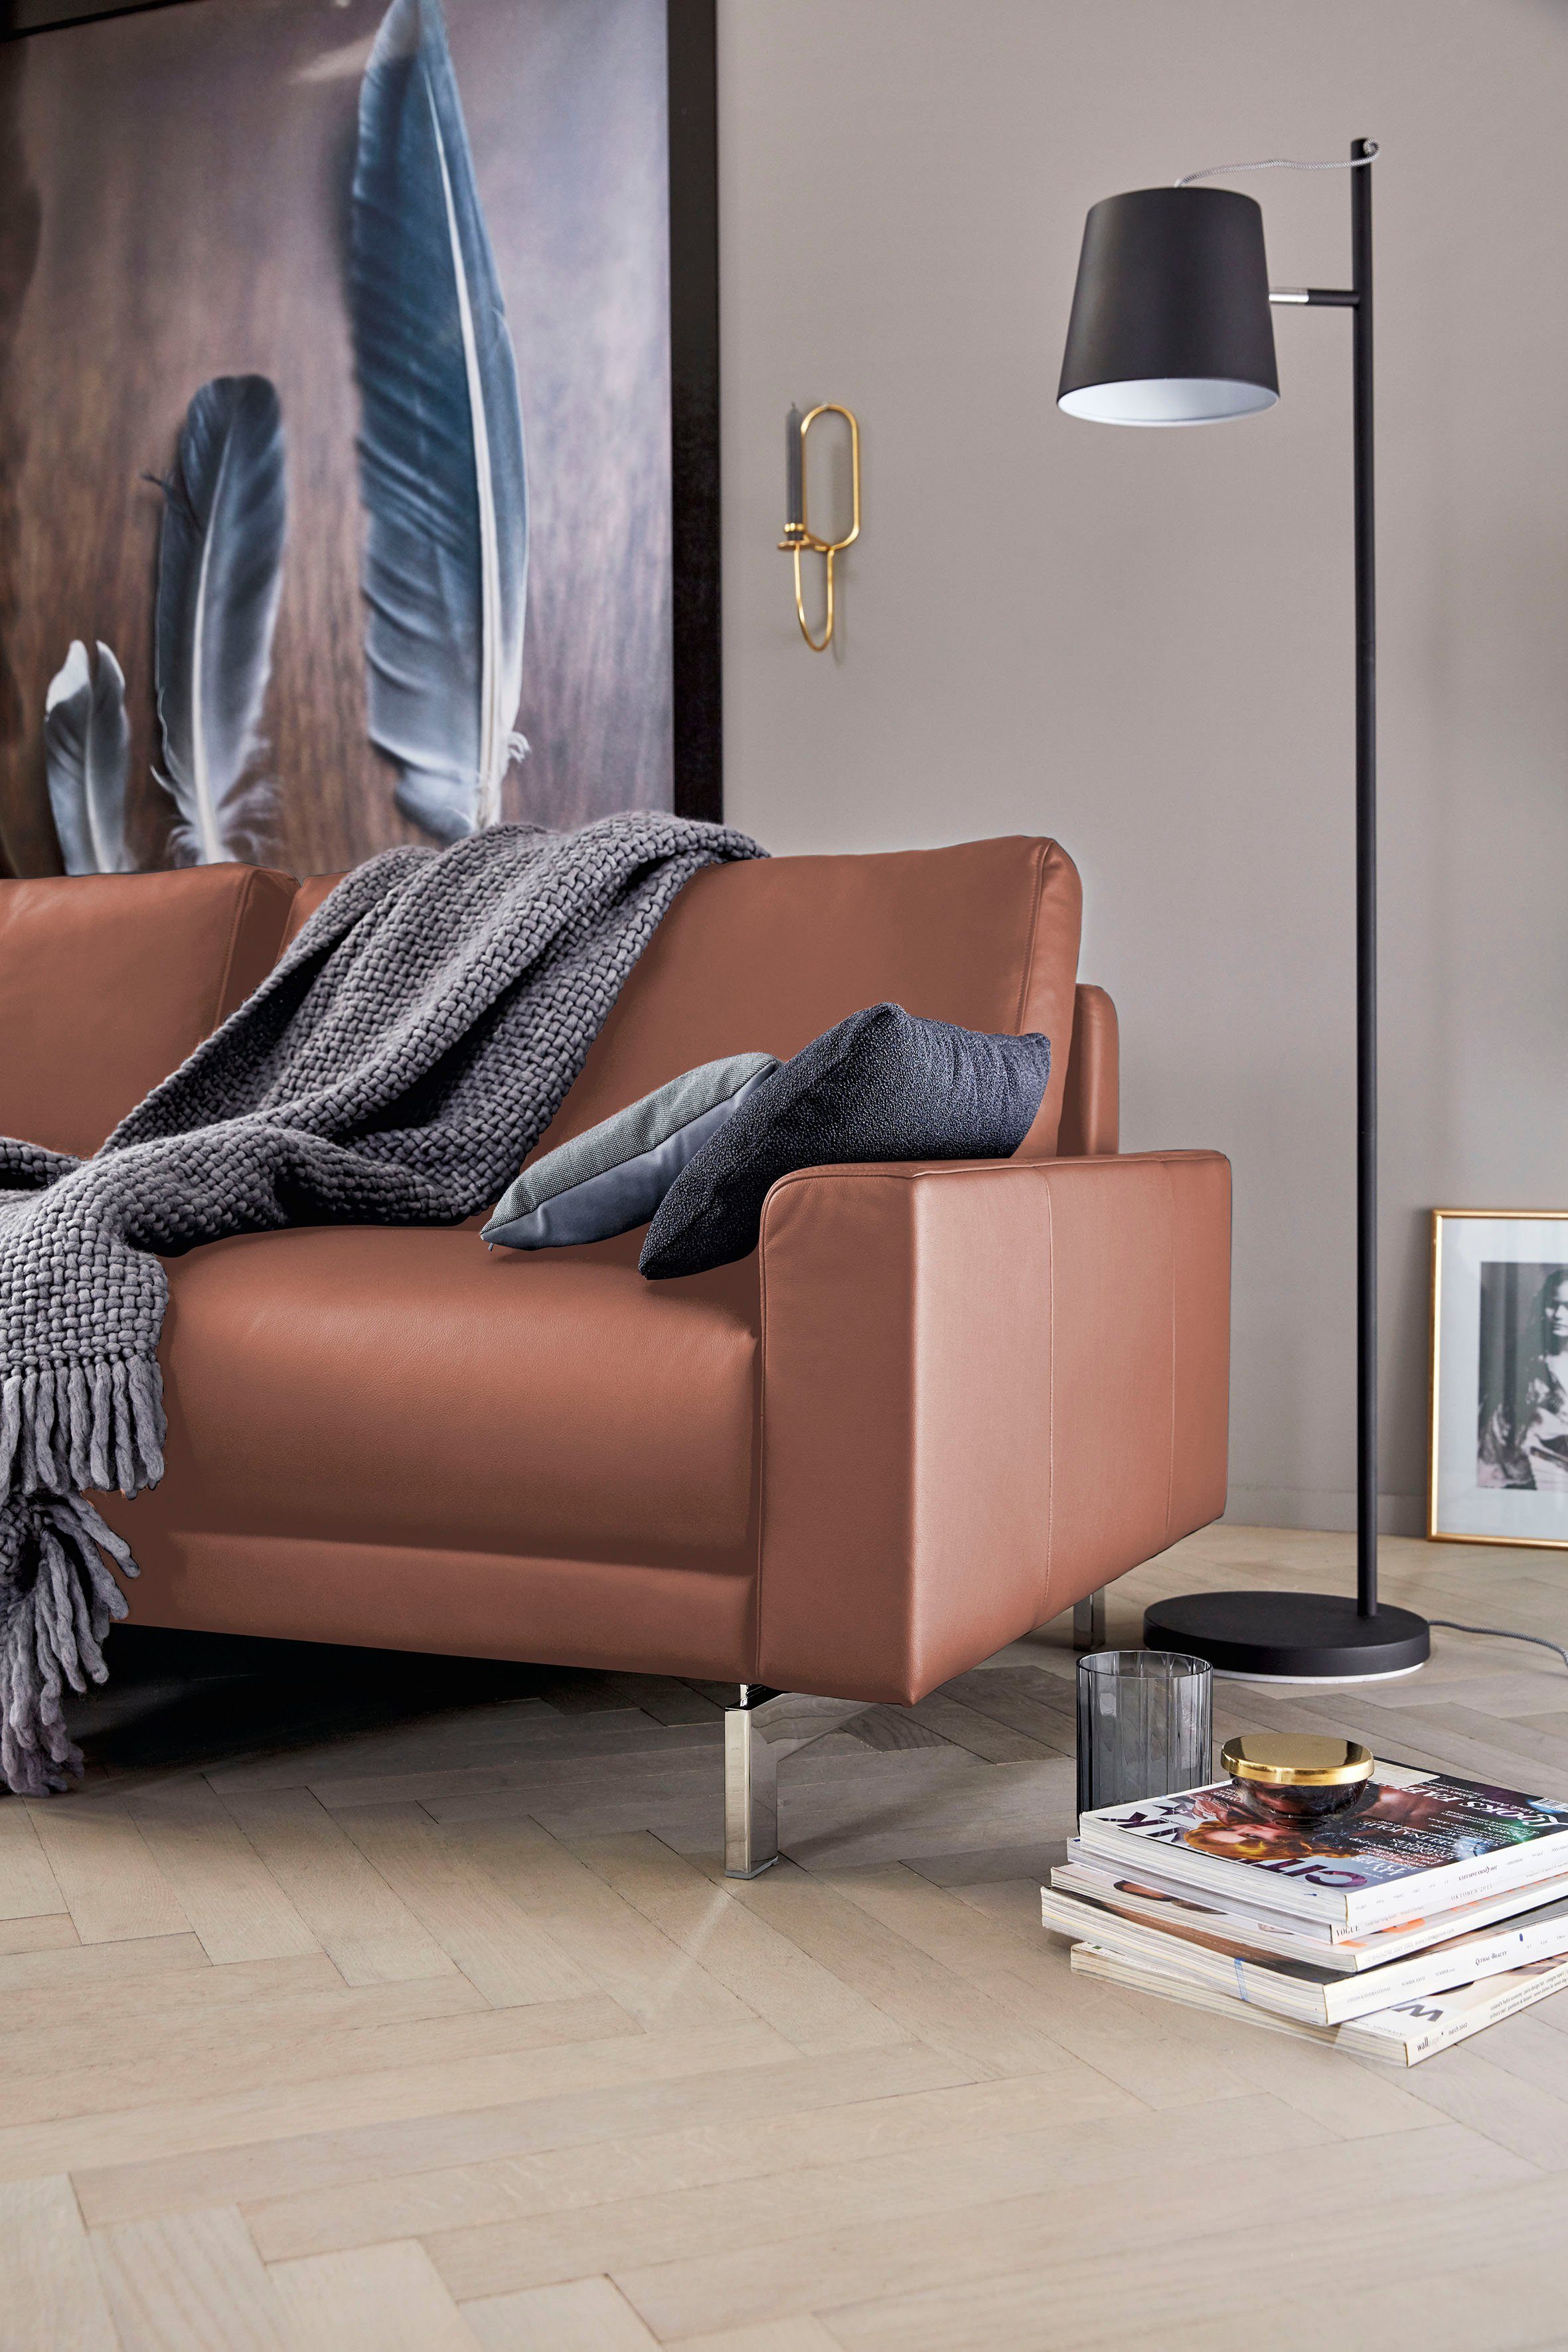 chromfarben Breite niedrig, 2-Sitzer hülsta glänzend, cm hs.450, Armlehne sofa 164 Fuß